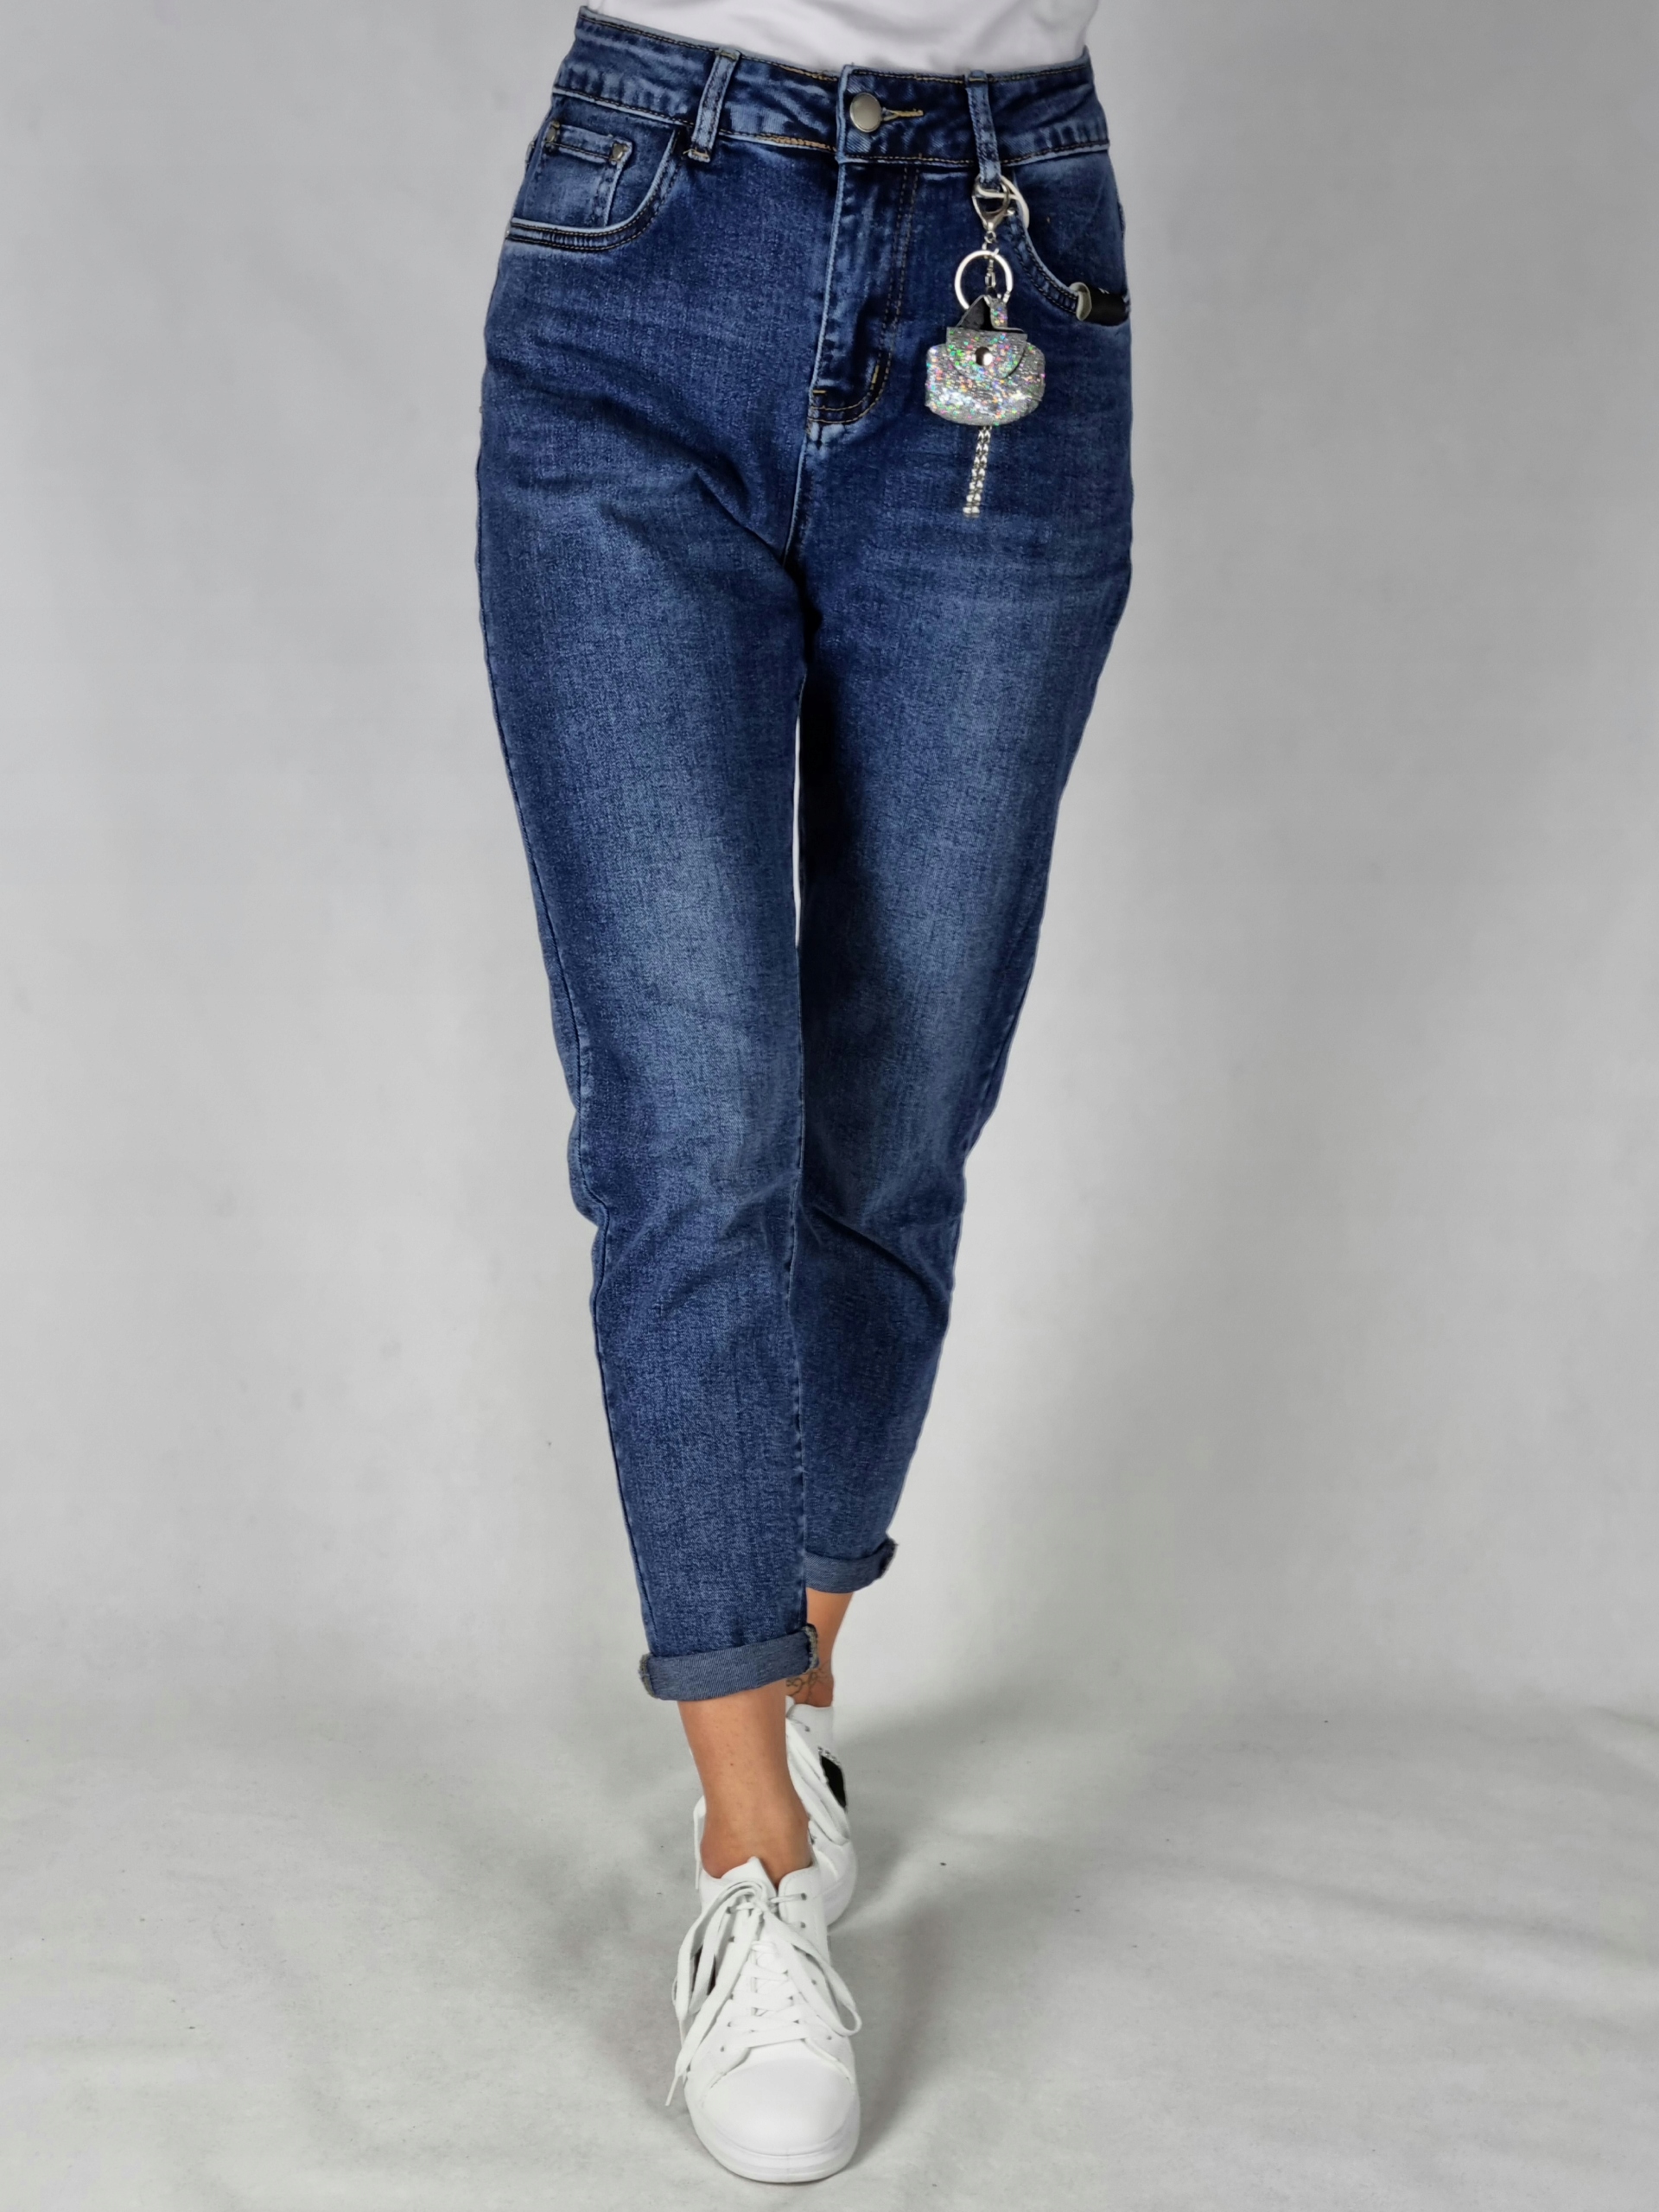 M. SARA BOYFRIEND джинсовые брюки размер M цвет темно-синий